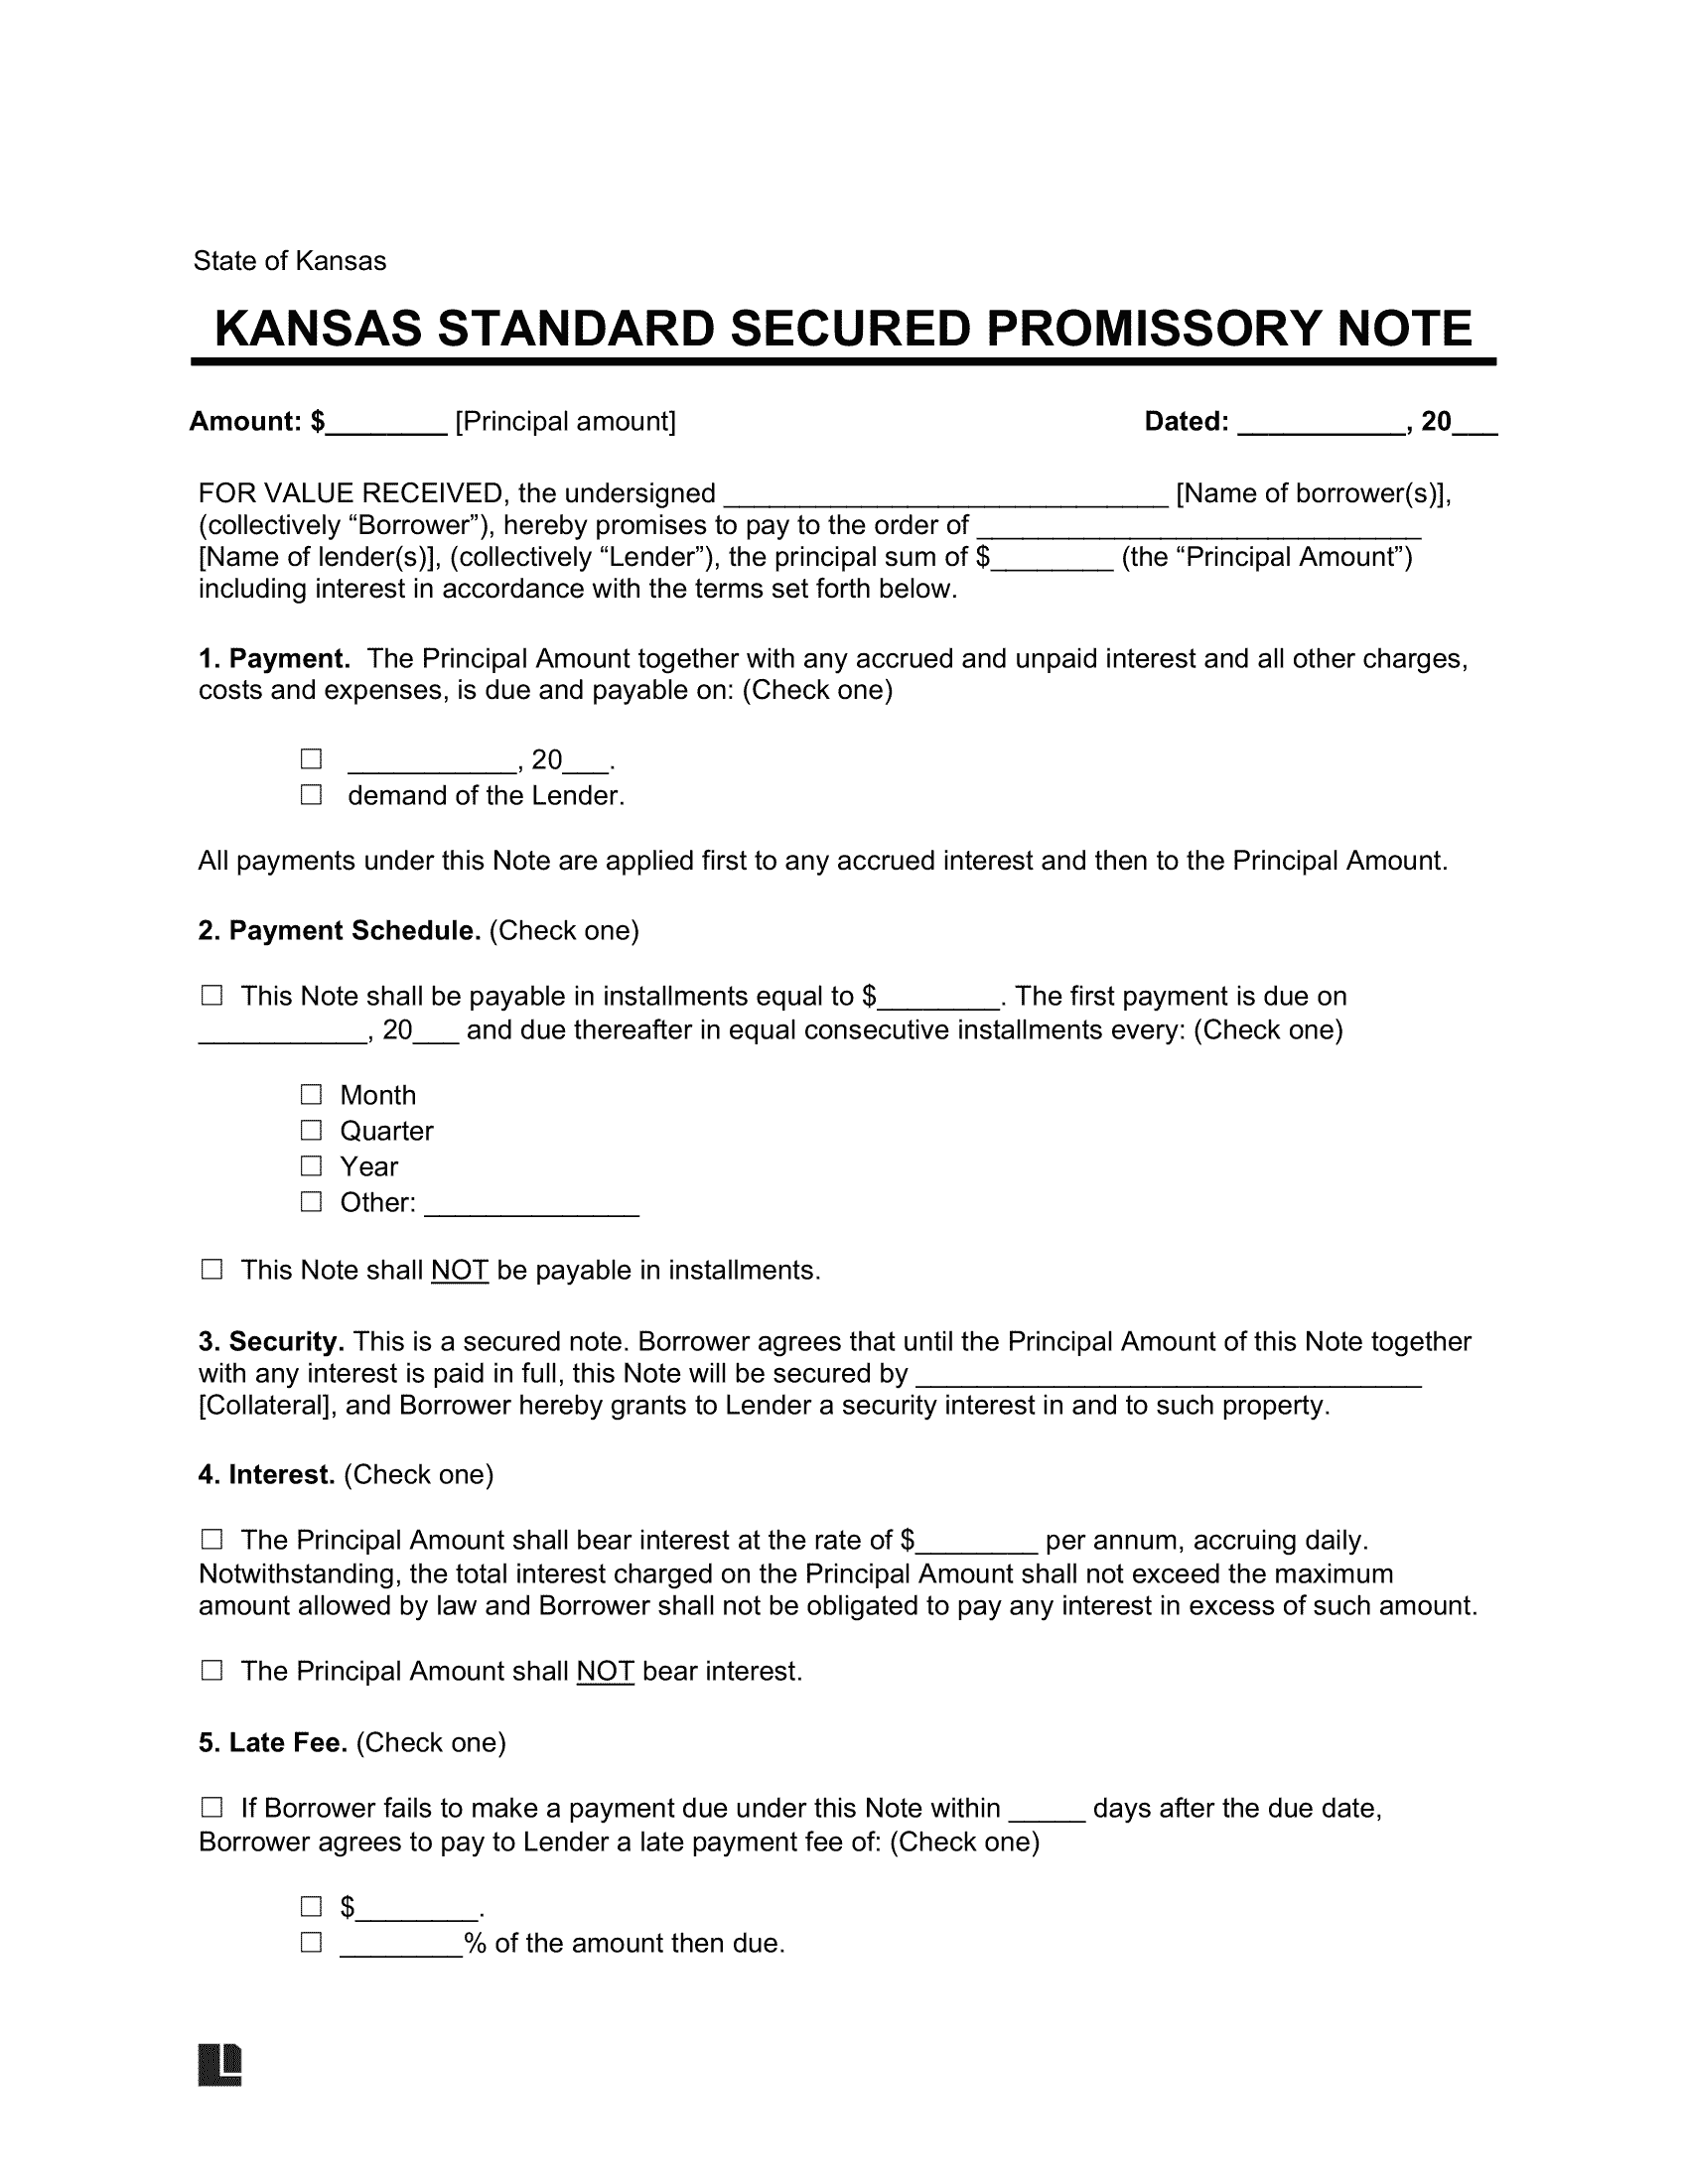 Kansas Standard Secured Promissory Note Template